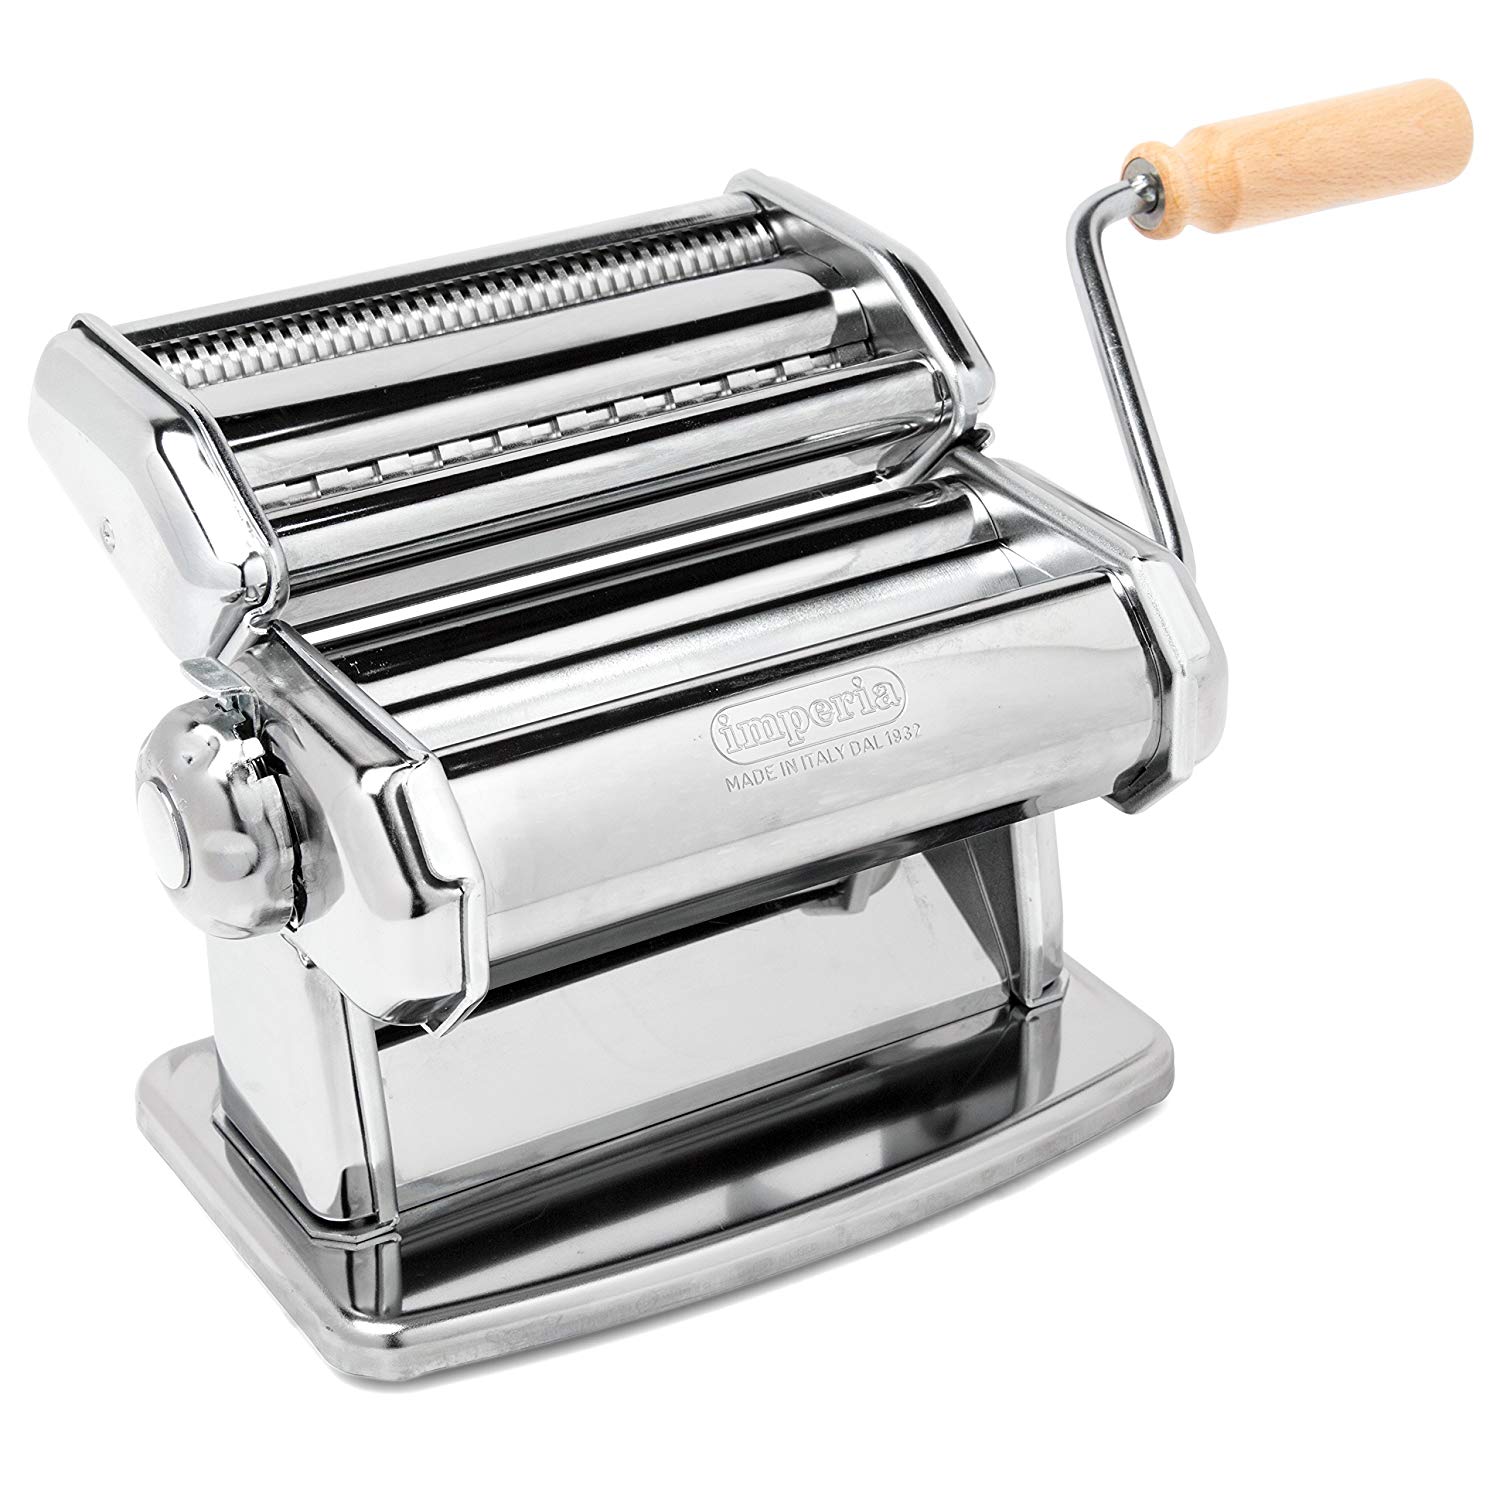 Stainless steel pasta press